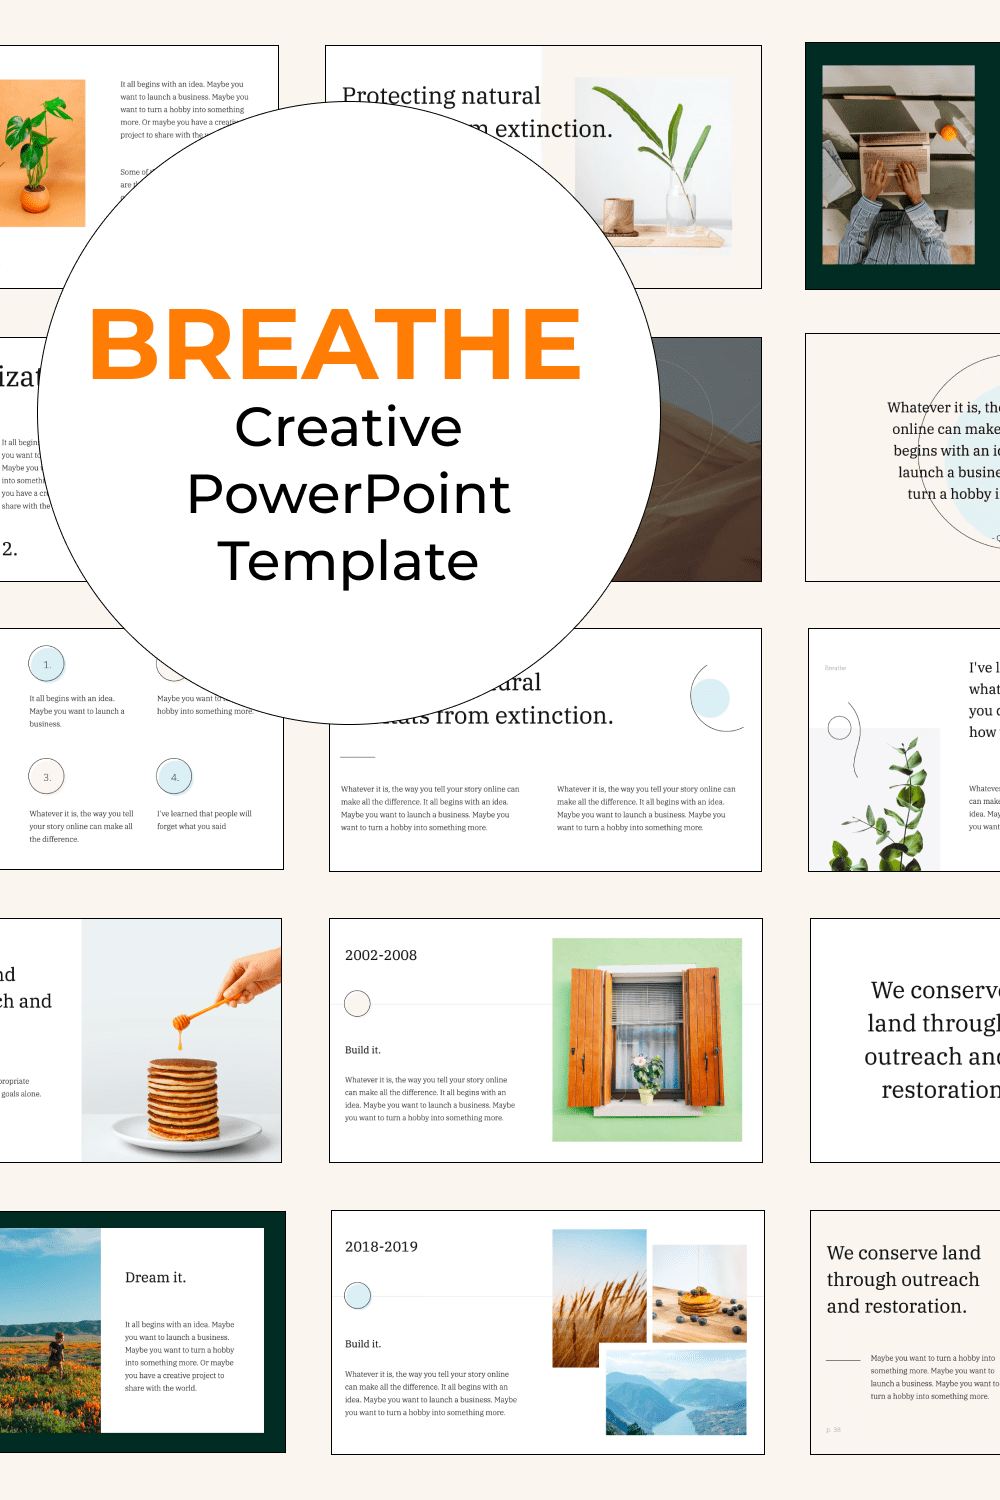 Breathe Creative PowerPoint Template Pinterest.